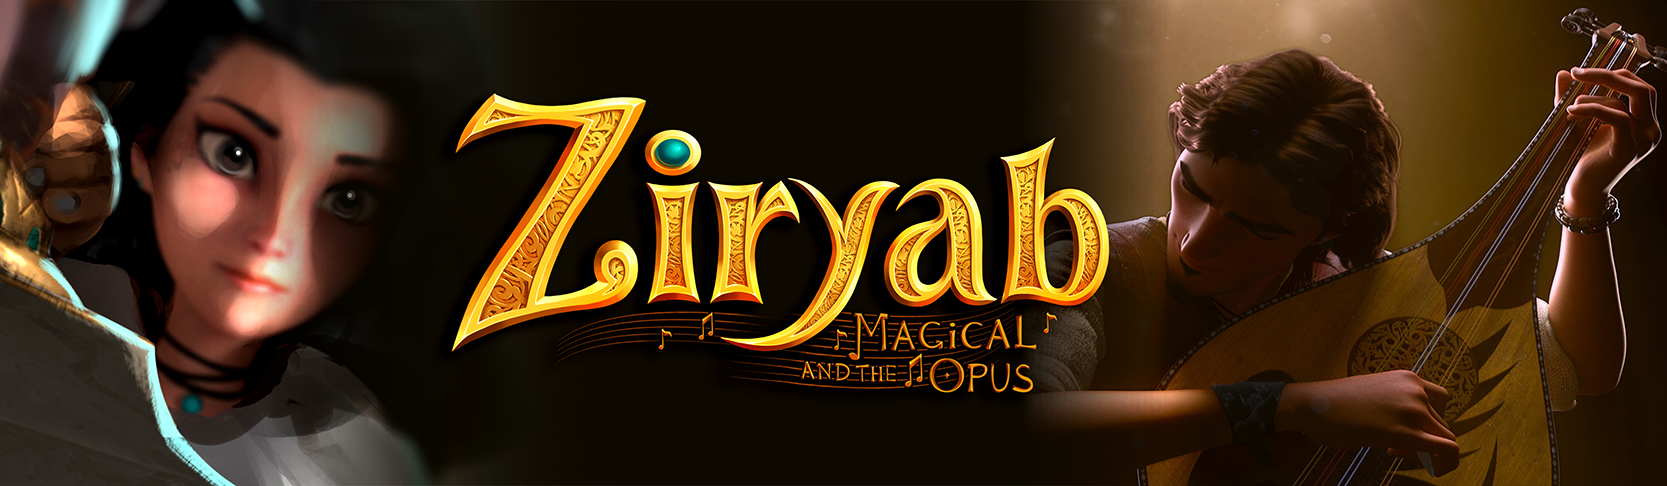 ziryab logo image